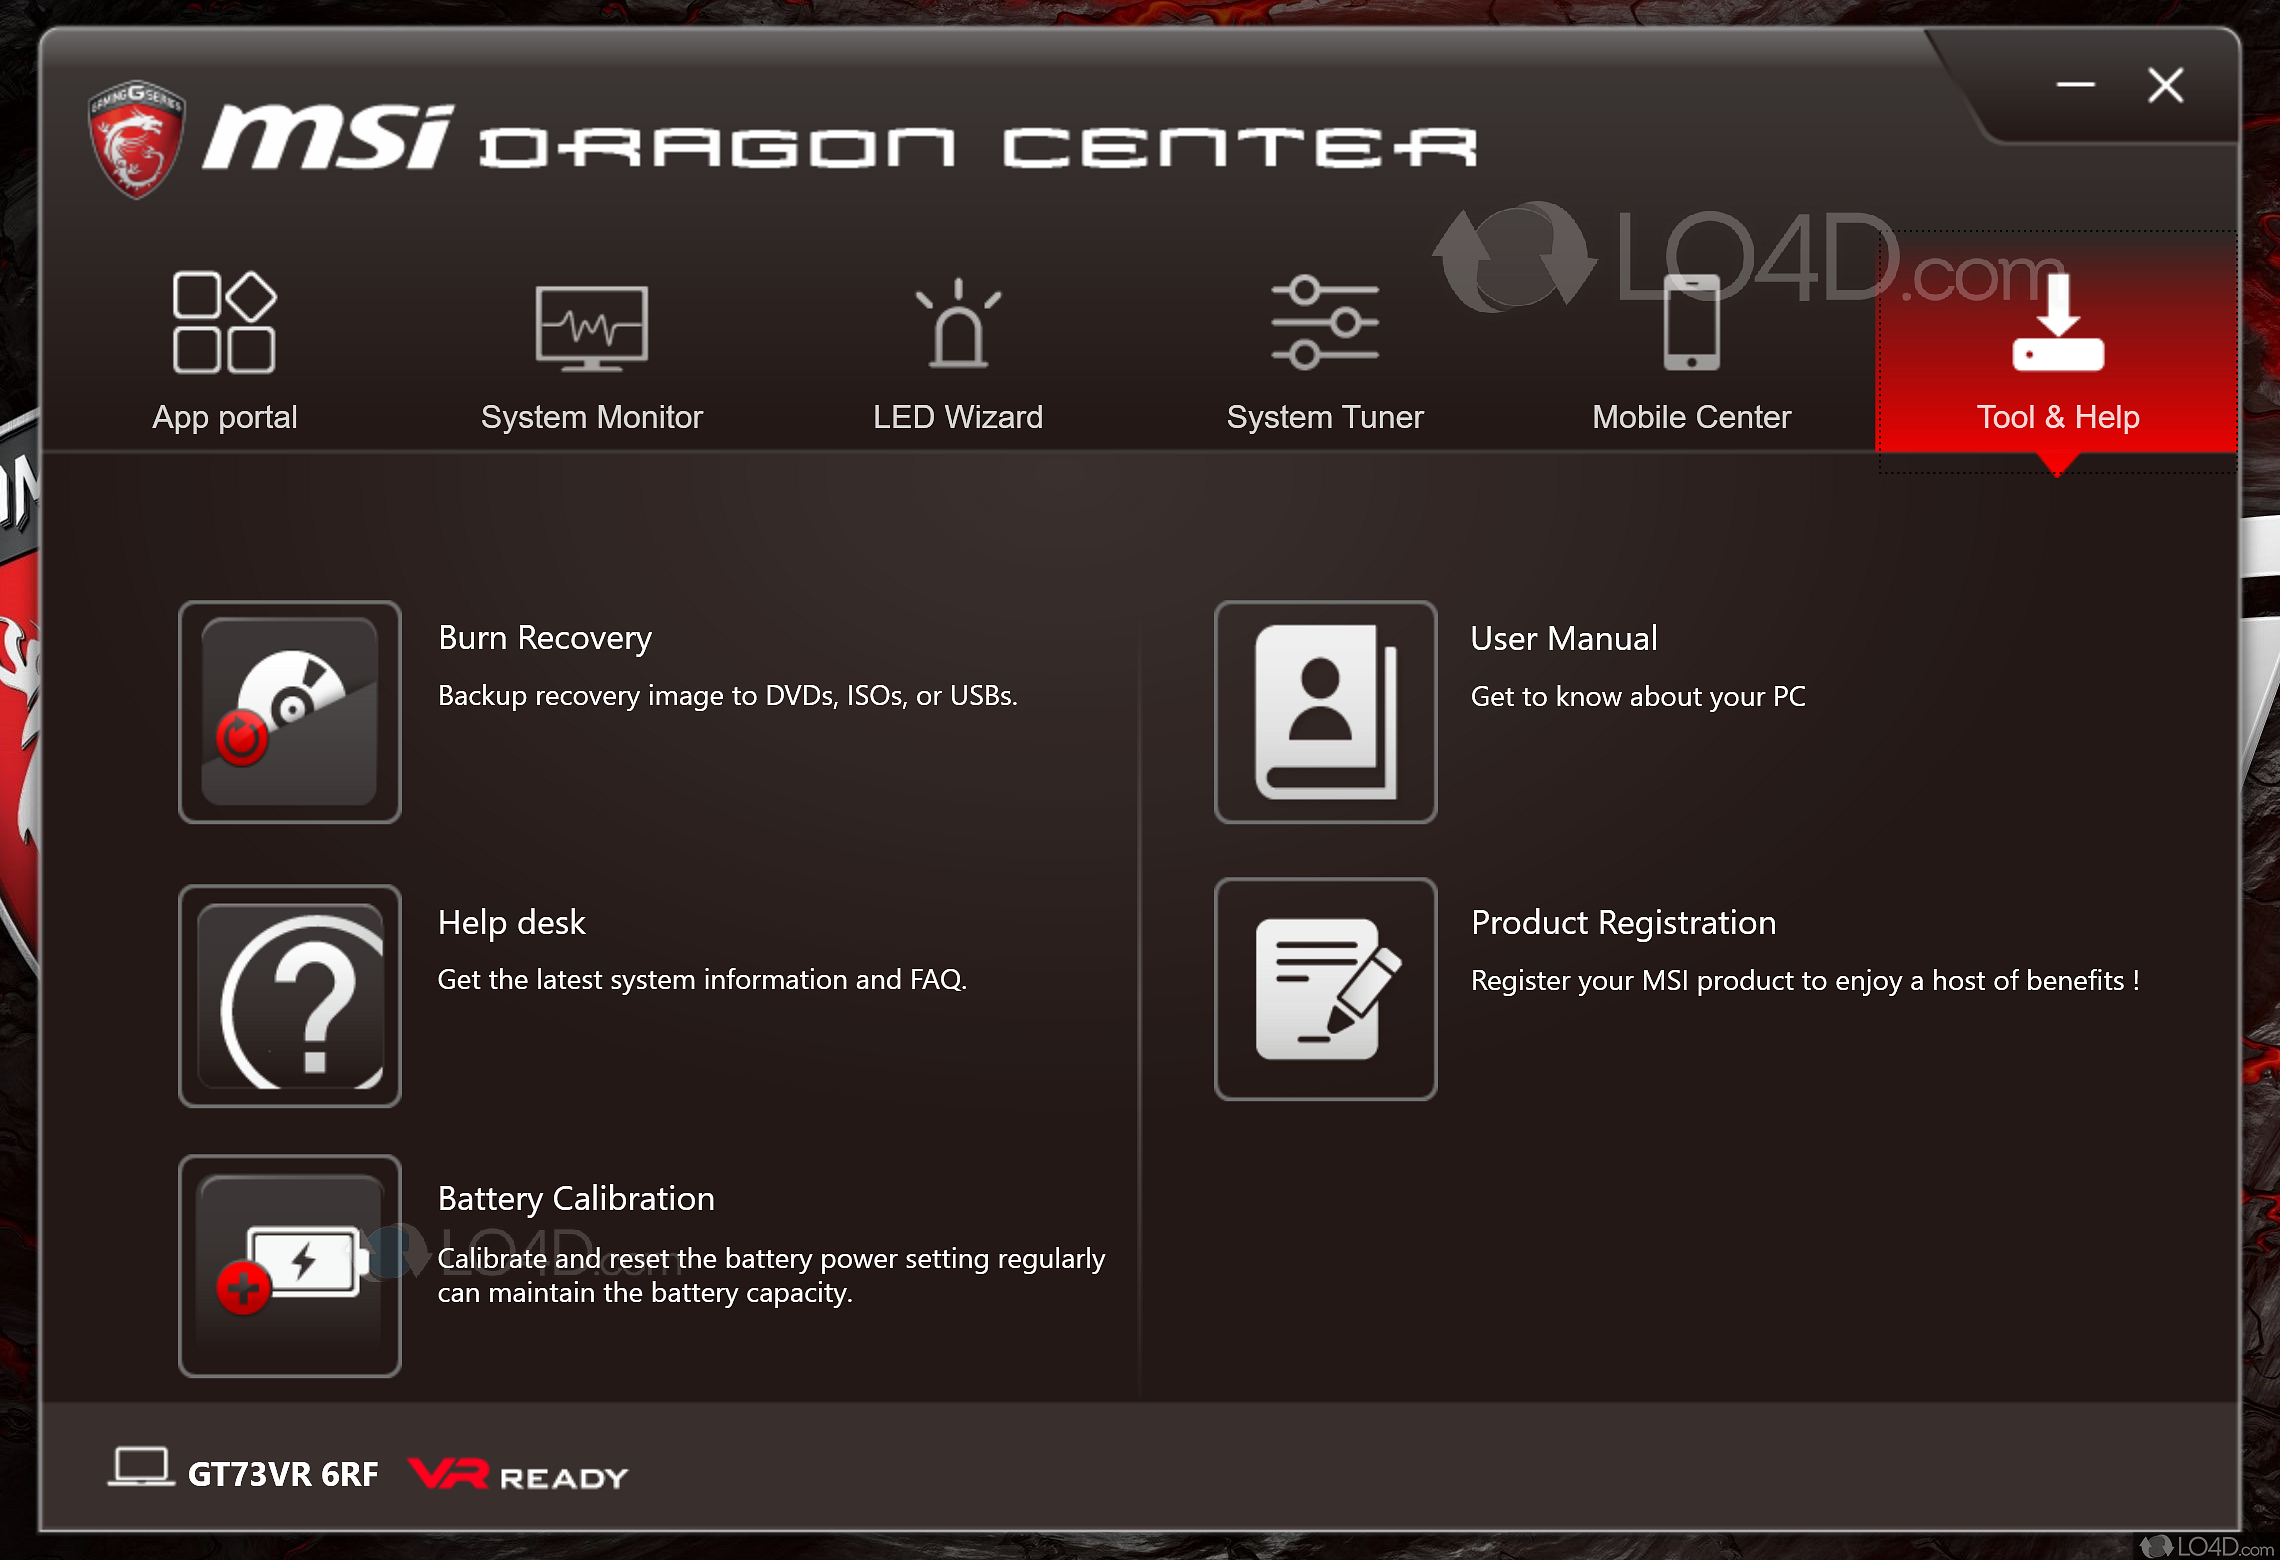 dragon center 2.0 download2.0